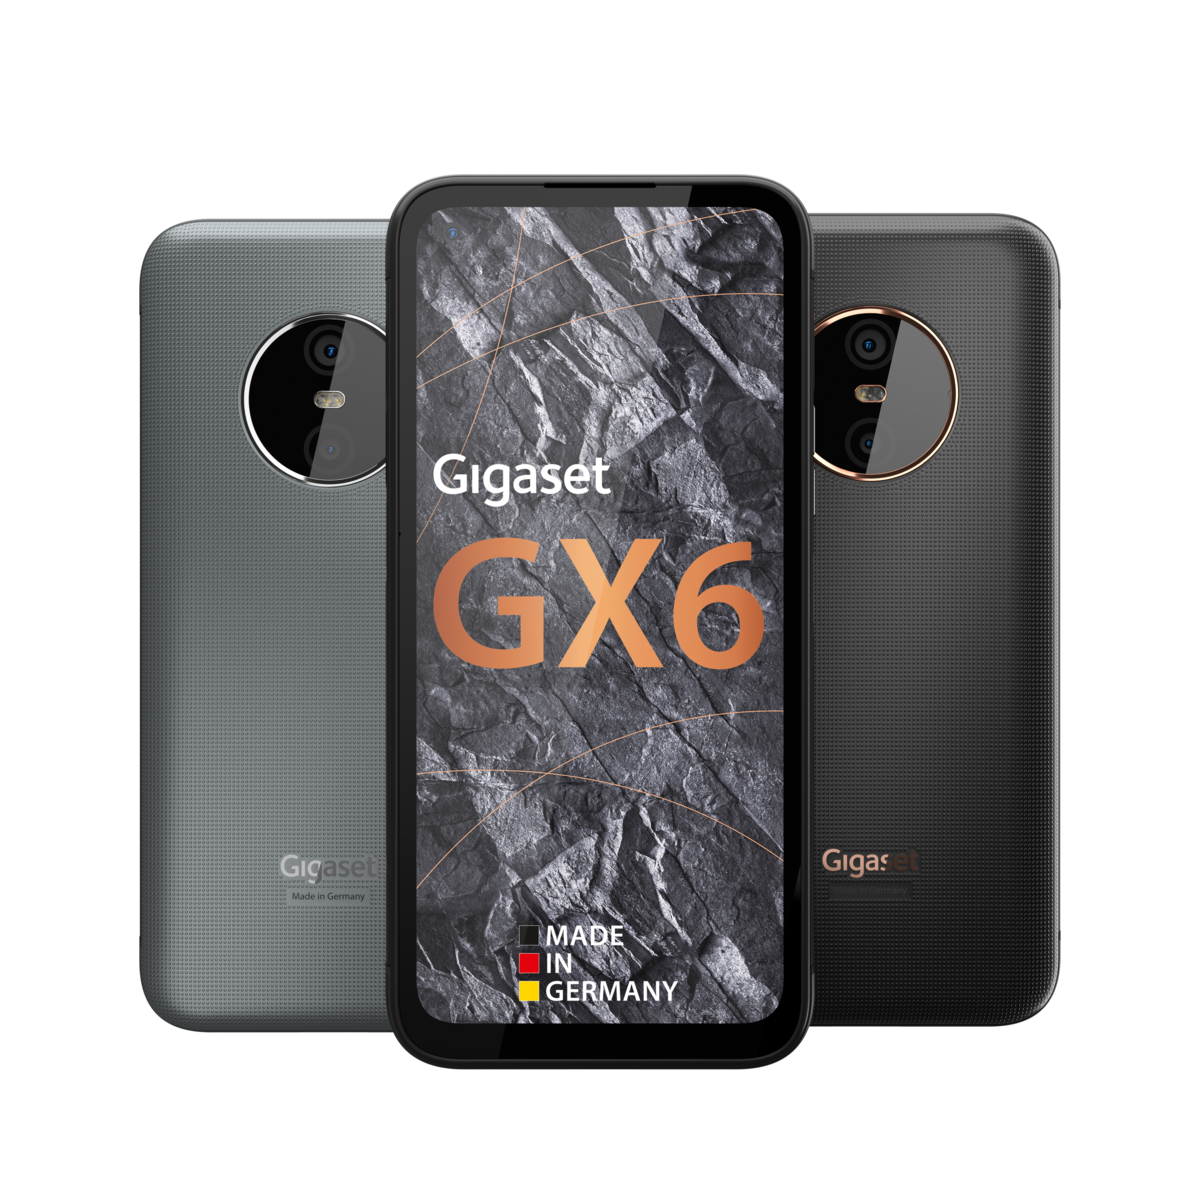 Gigaset presenta su smartphone 5G para exteriores GX6. “Made in Germany”